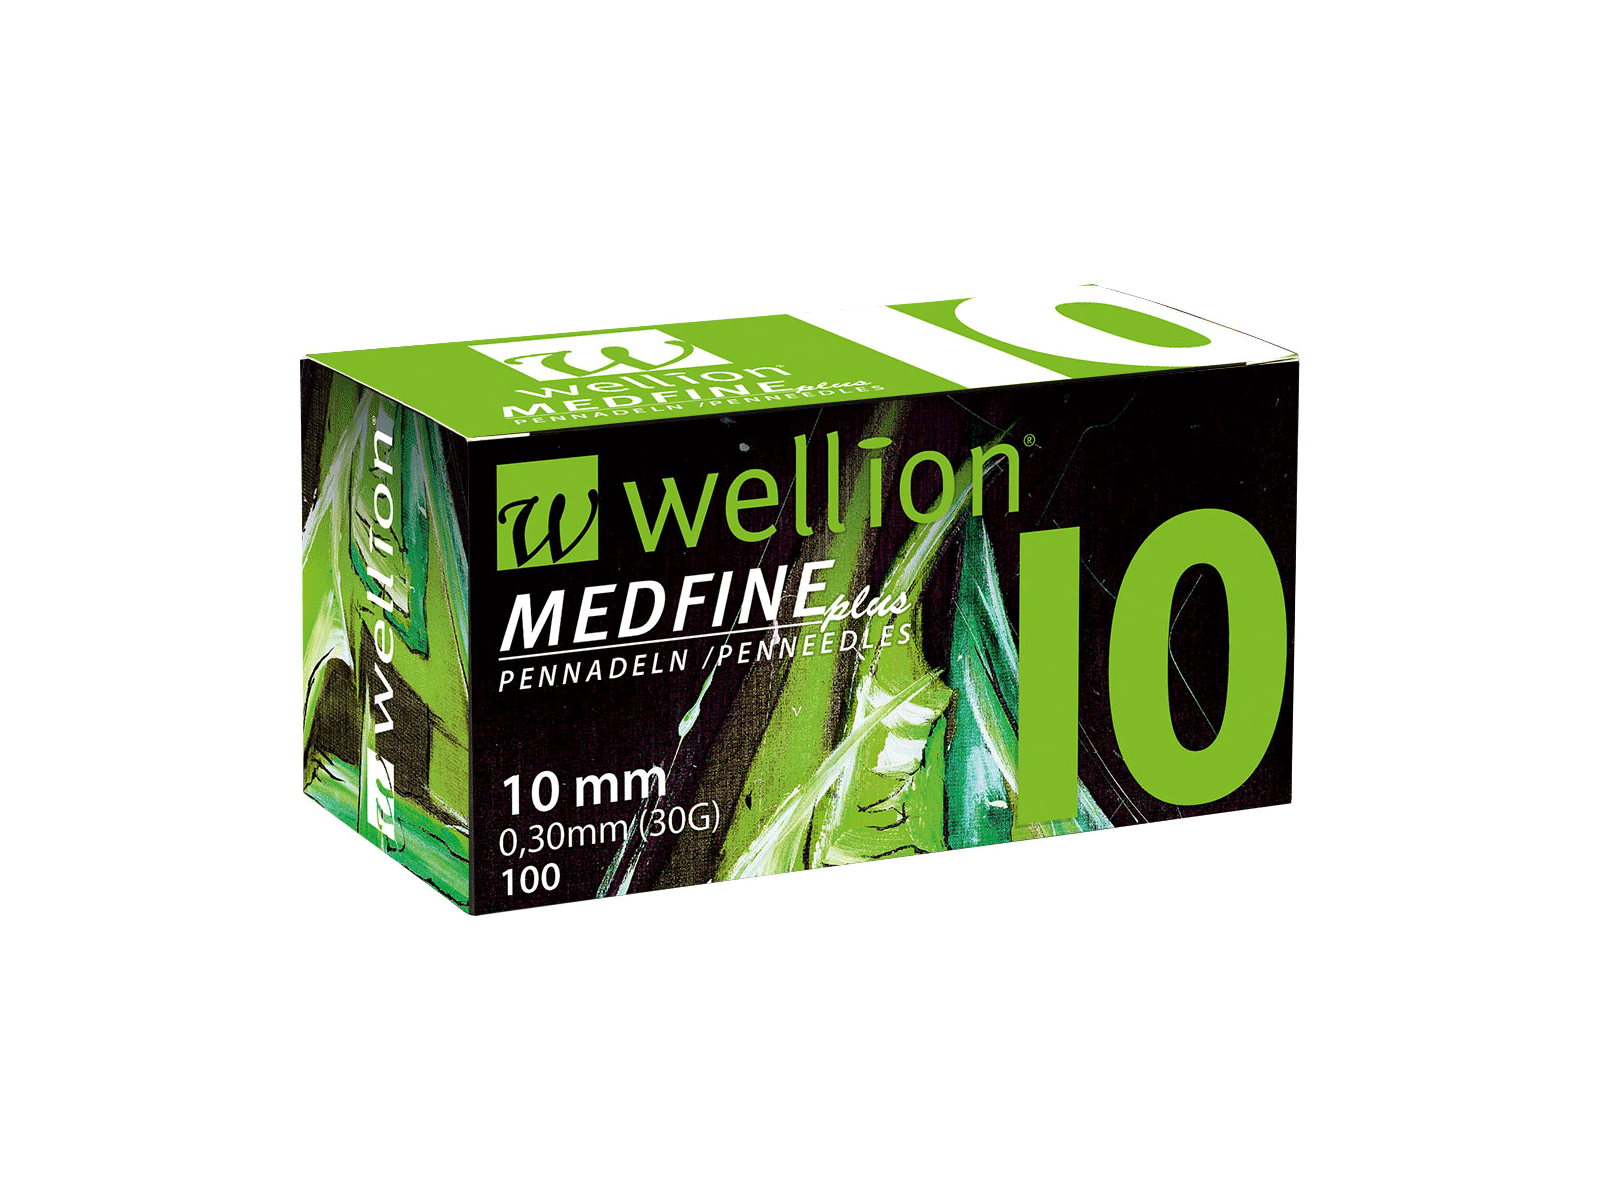 WELL110 Wellion MEDFINE plus Pennadeln, 10 mm, 100 Stück